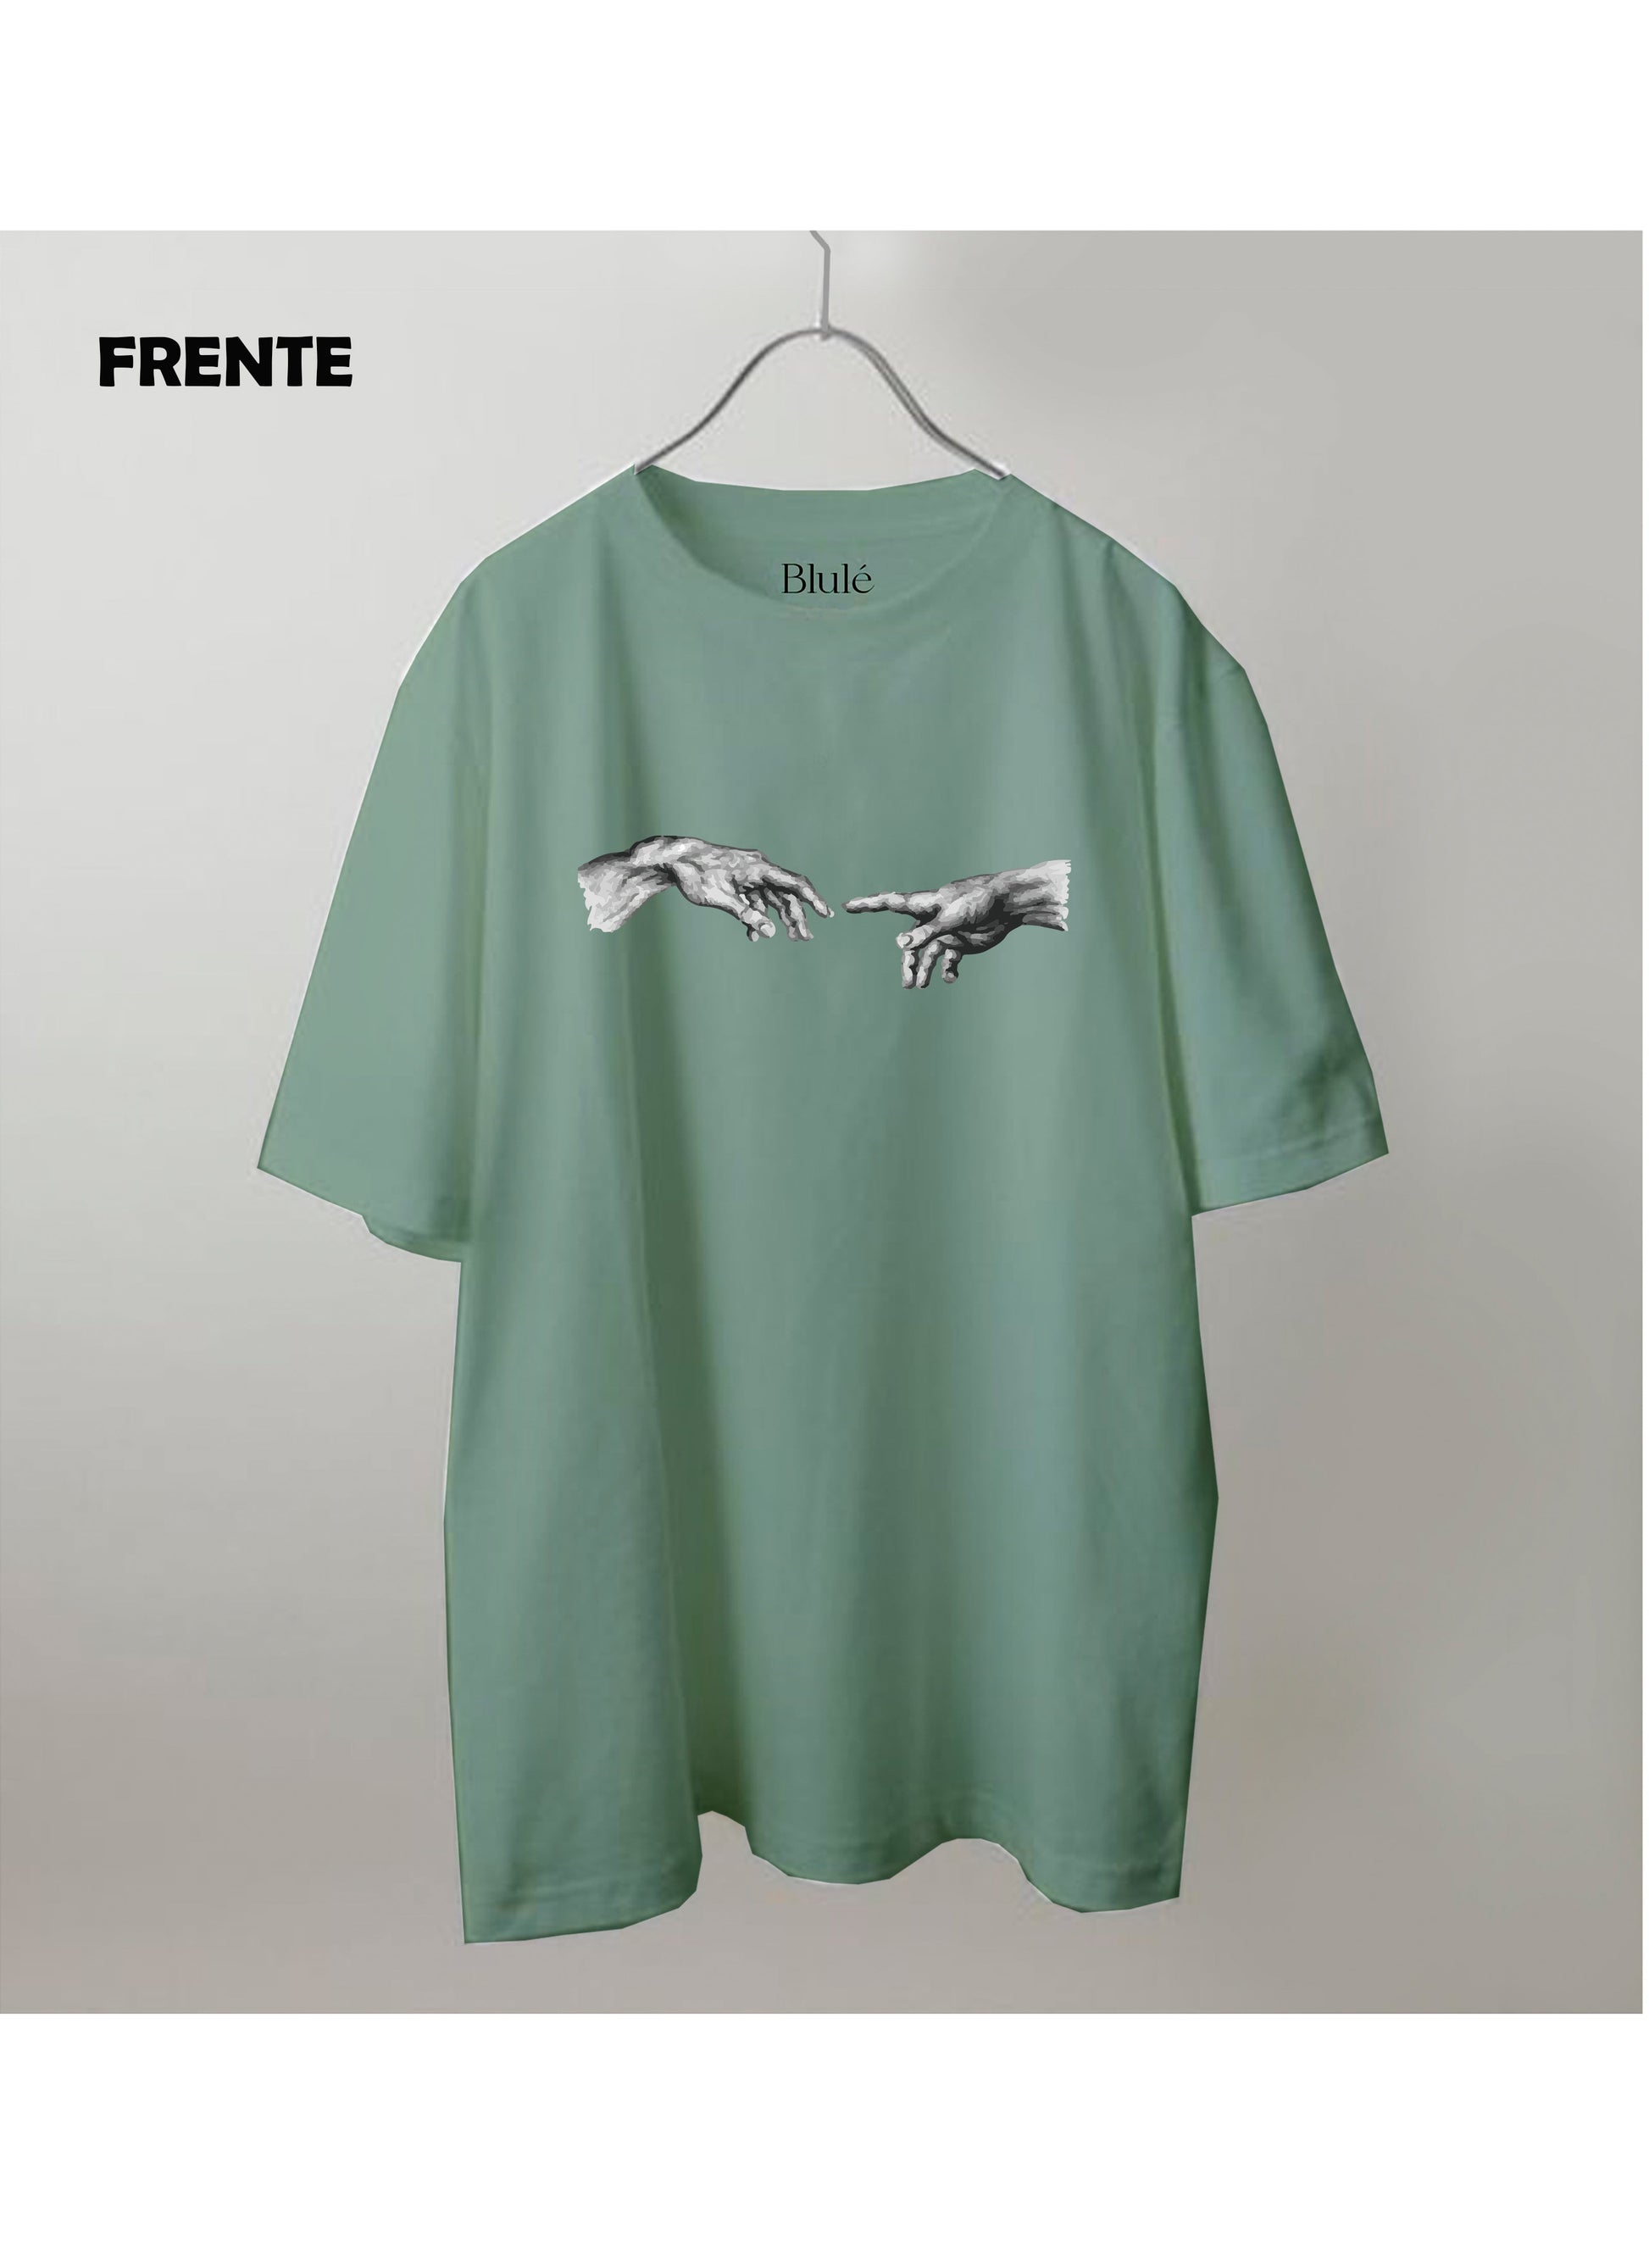 Imagen Camiseta Oversized Premium Unisex Creación de Adán Verde Invierno